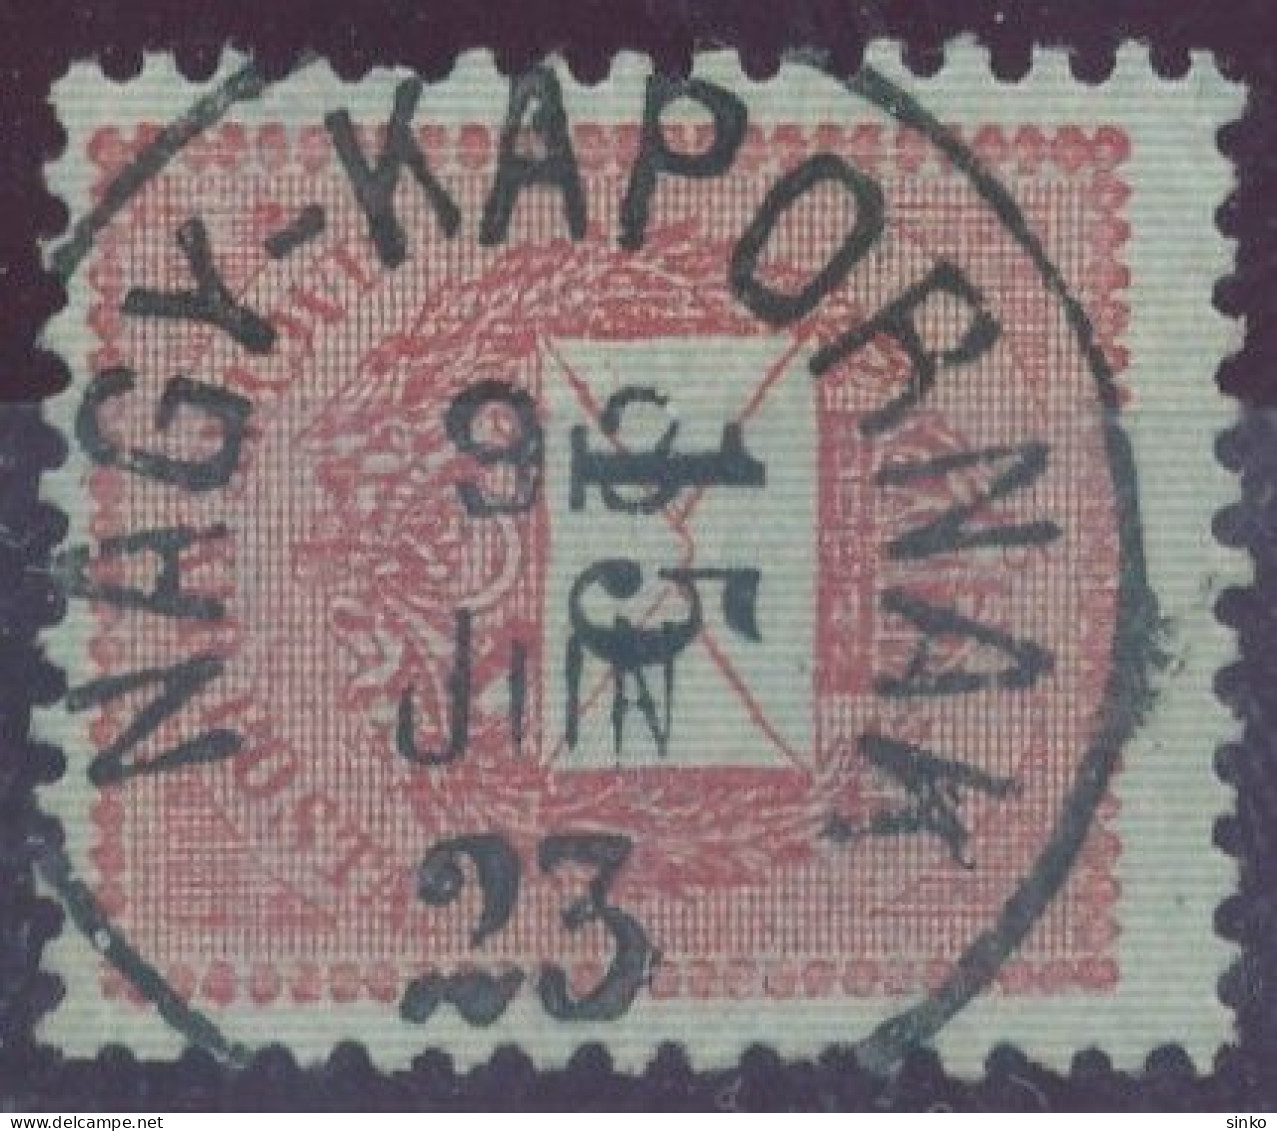 1889. Black Number Krajcar 15kr Stamp, NAGY-KAPORNAK - ...-1867 Prephilately